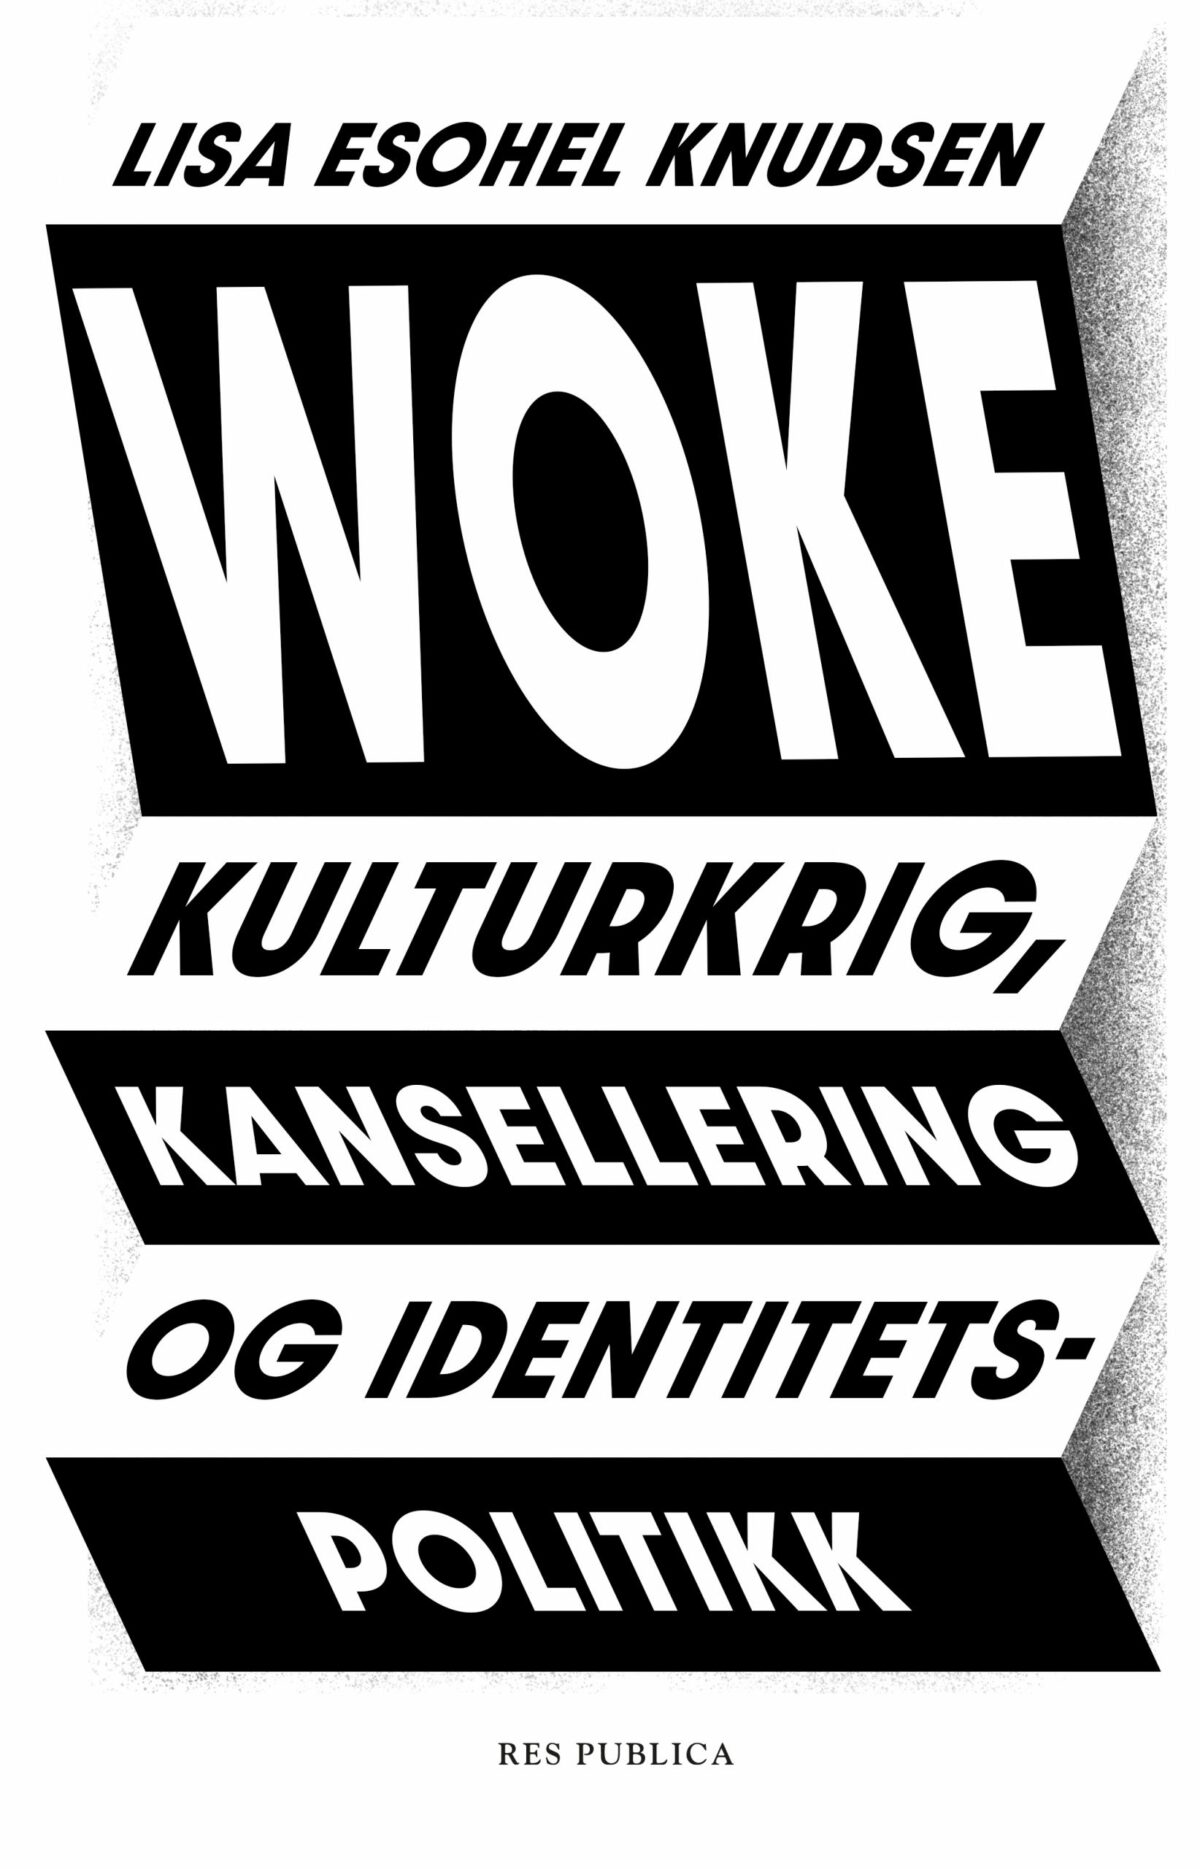 Bokomslag med tekst. Forfattar: Lisa Esohel Knudsen. Tittel: Woke. Undertittel: Kulturkrig, kansellering og identitetspolitikk.